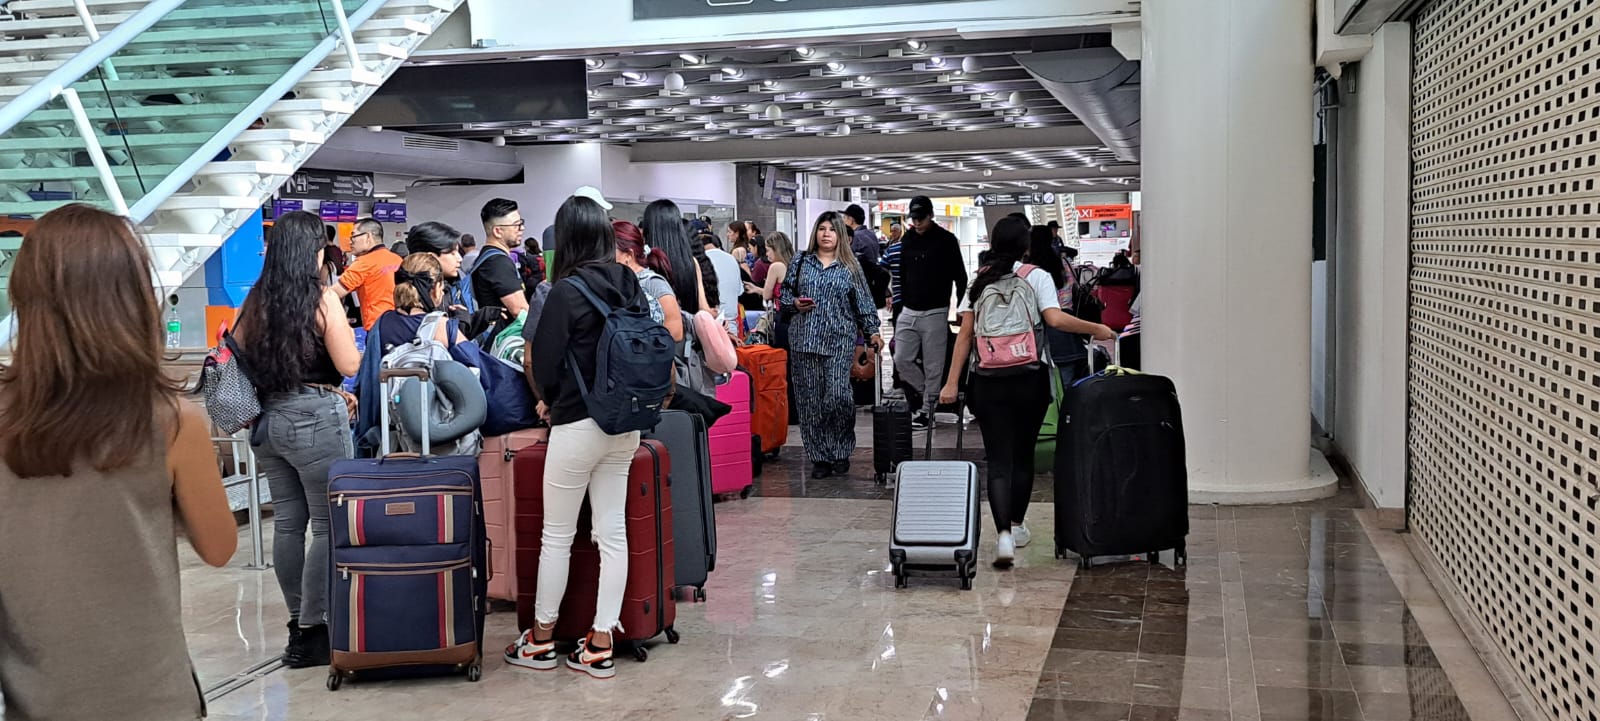 Apagón de Microsoft retrasa vuelos en Mazatlán